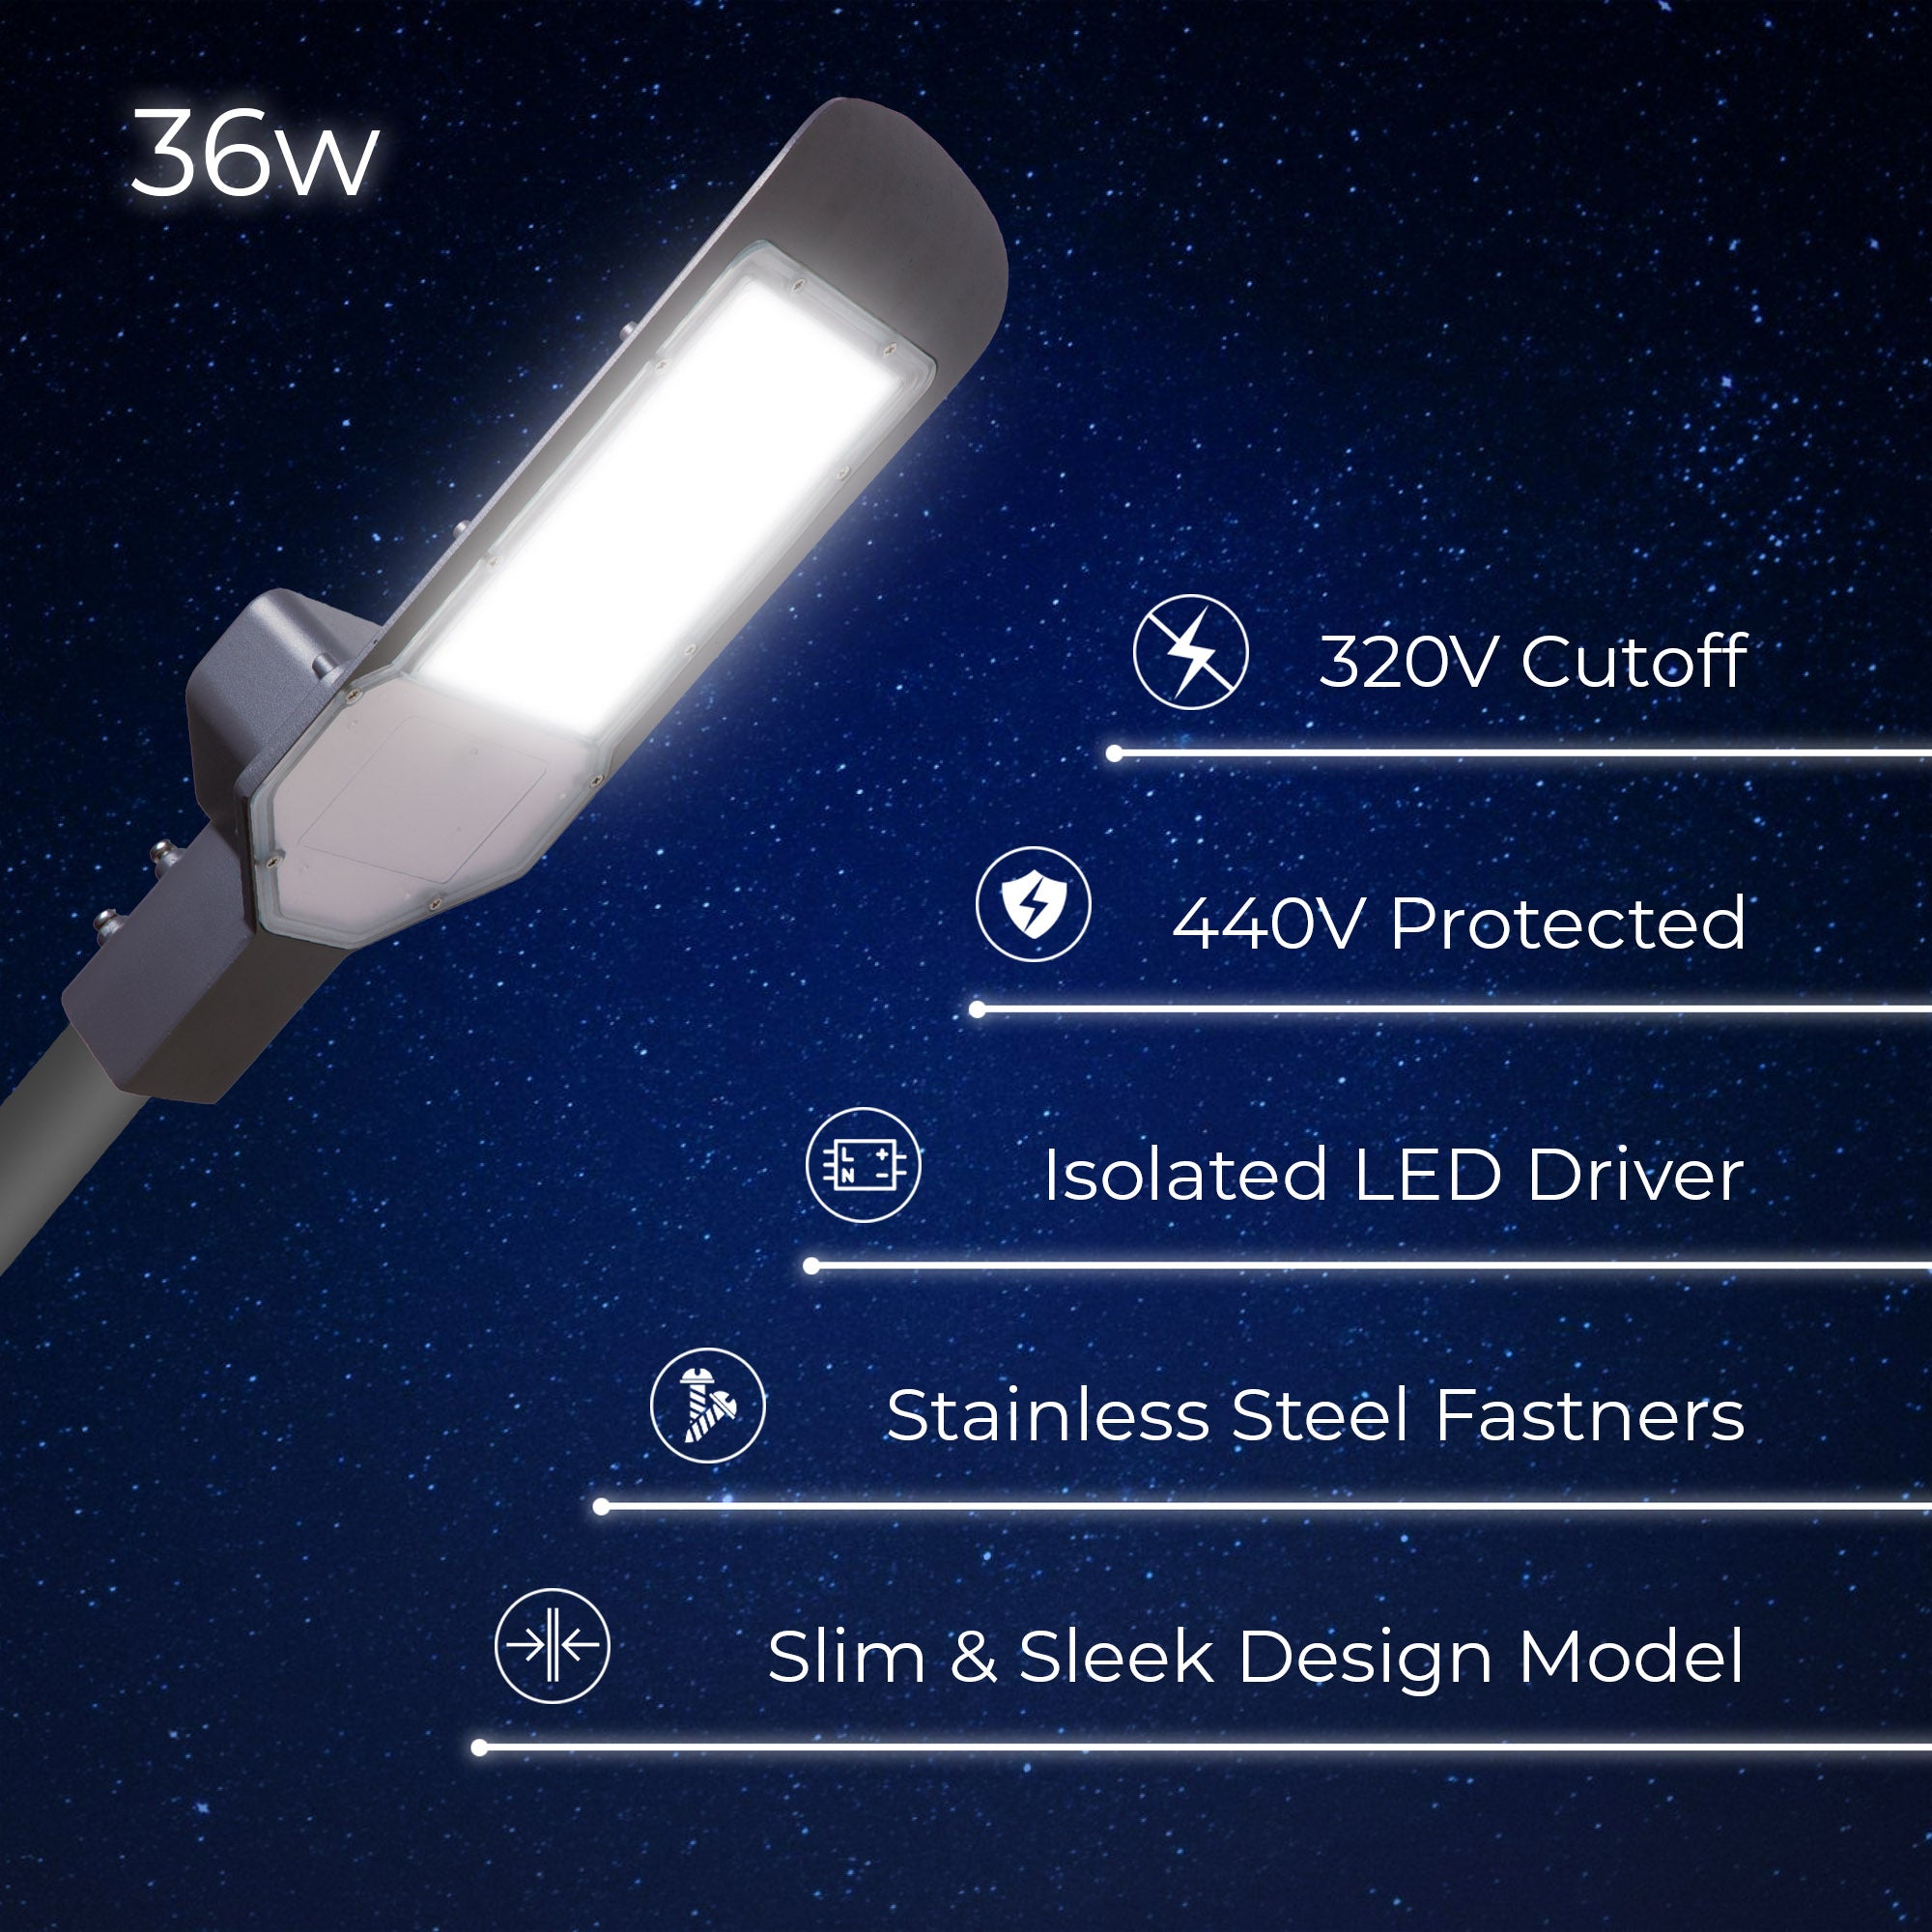 Specification of Lexa 36W led path light #watts_36w